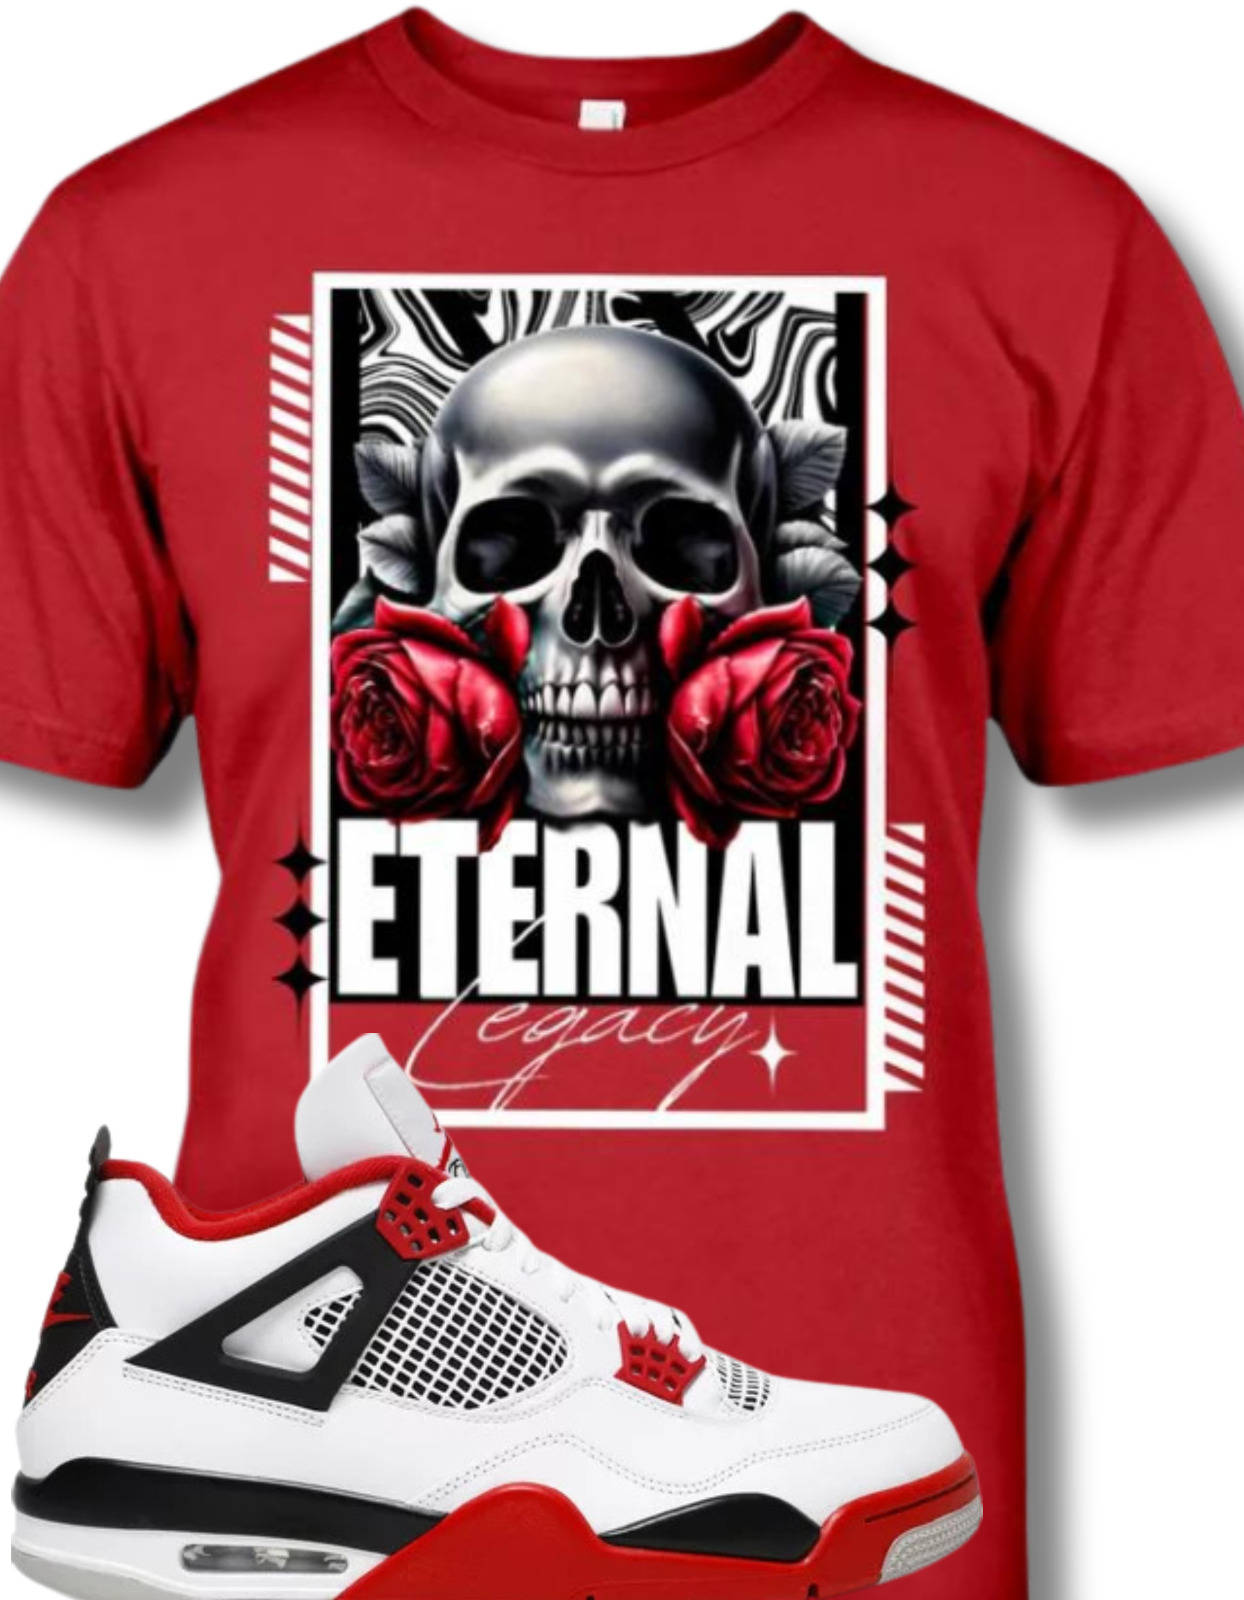 SNEAKER EFFECT Tee shirt to match Air Jordan Retro 4 Fire Red Sneakers